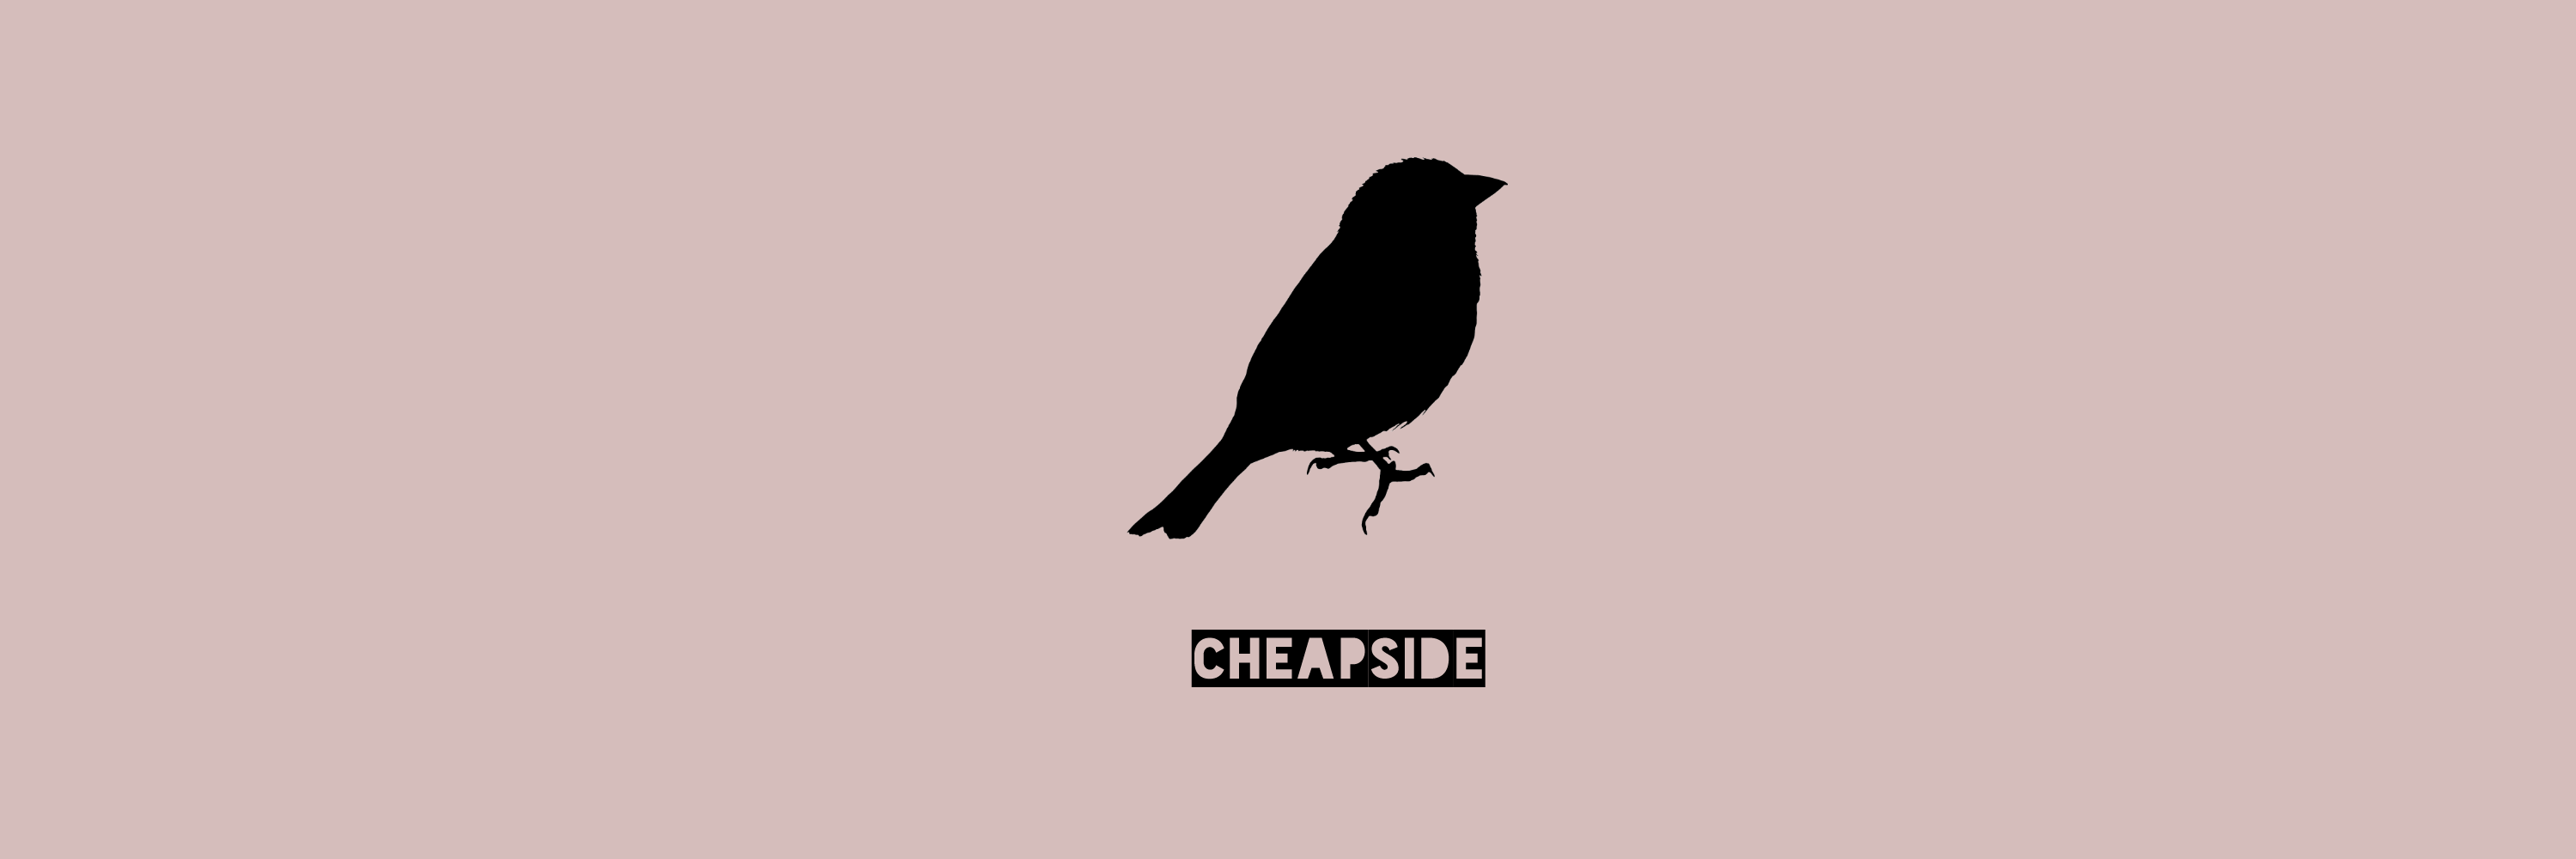 cheapside